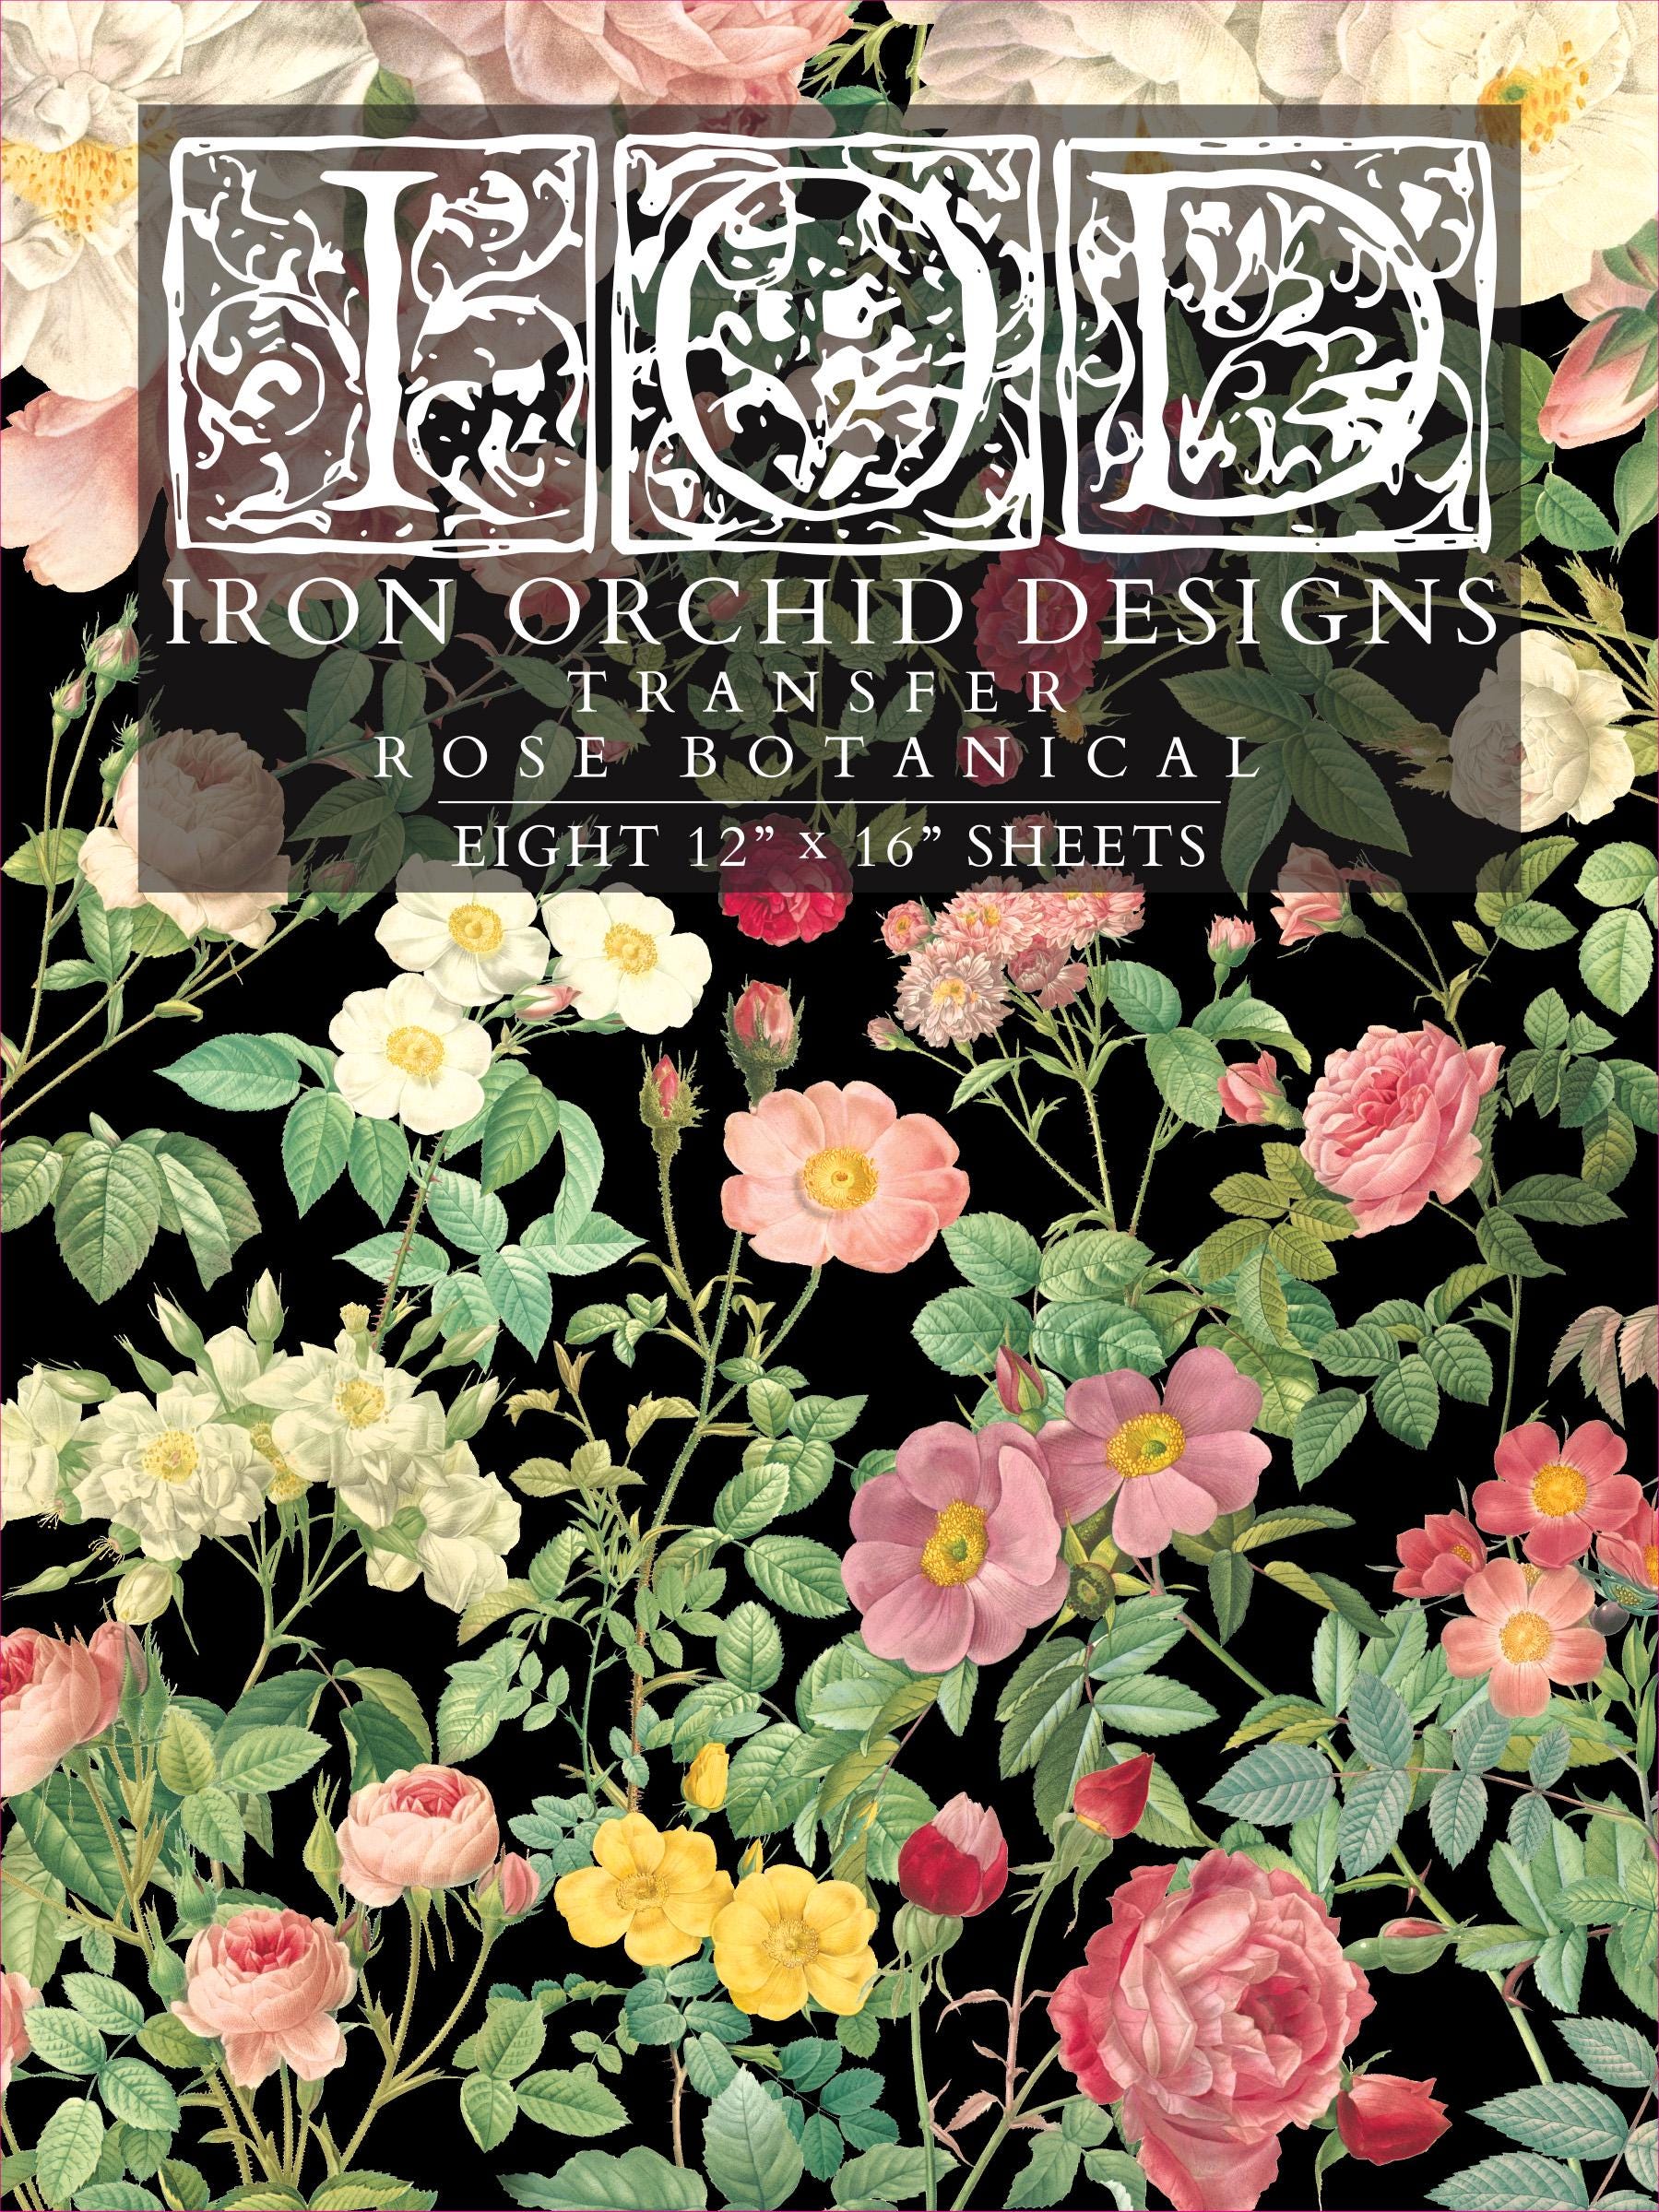 IOD Rose Botanical Rub On Transfer Sheet, Transfers for crafts, craft supply, Card embellishment, floral rose image transfer